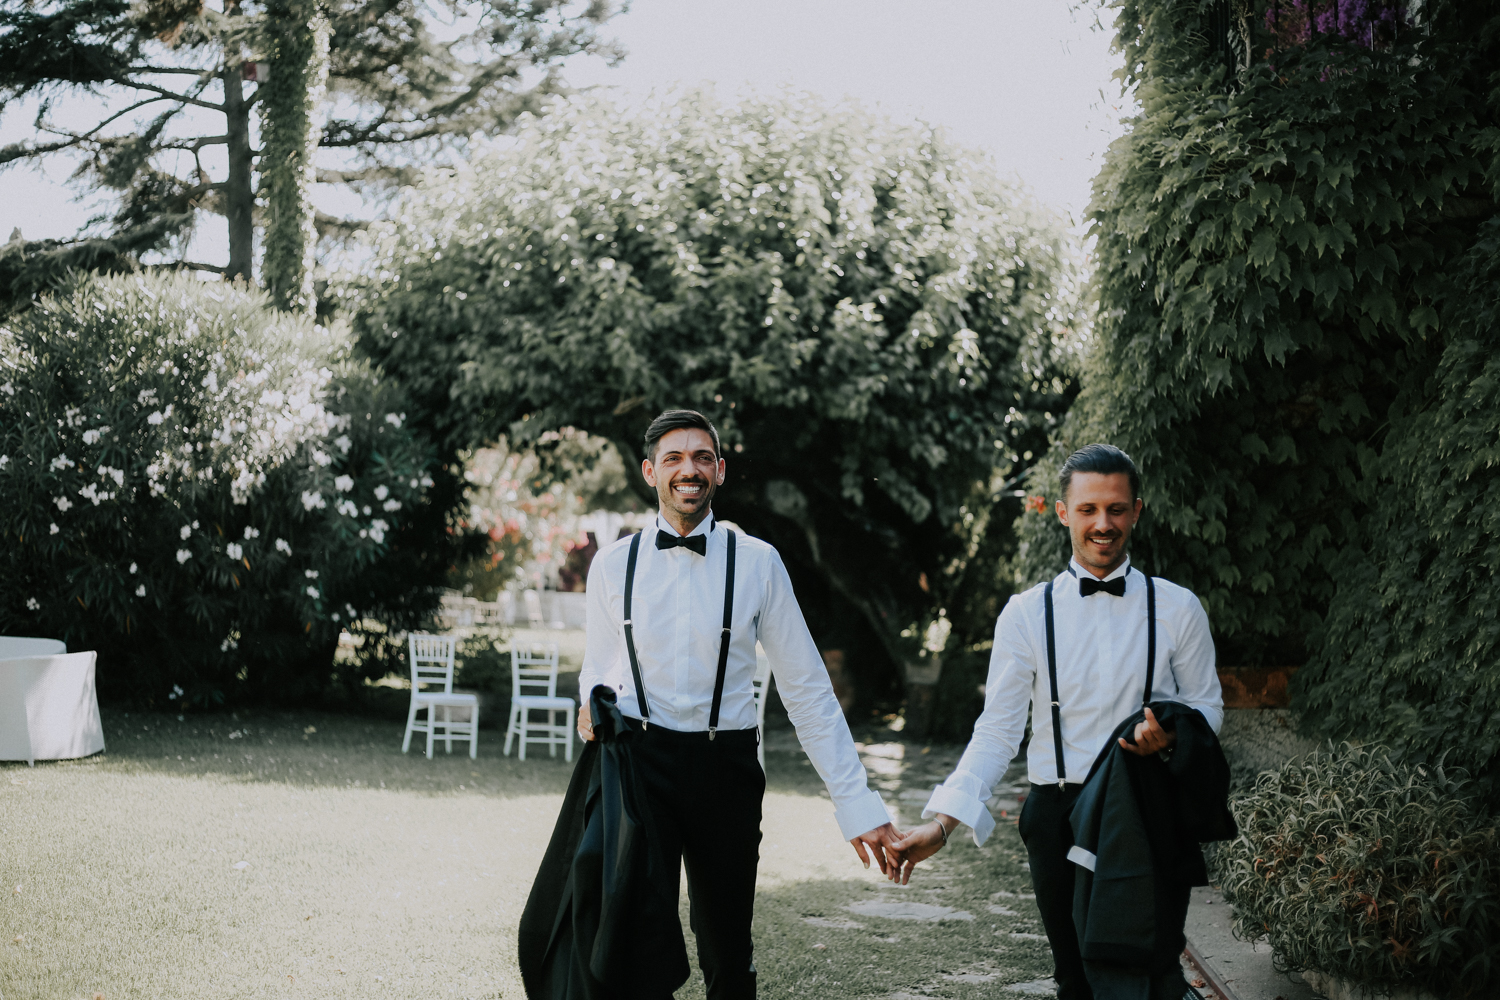 https://www.weddingamalfi.com/wp-content/uploads/Alessandro-and-Diego-grooms-wedding-dress.jpg